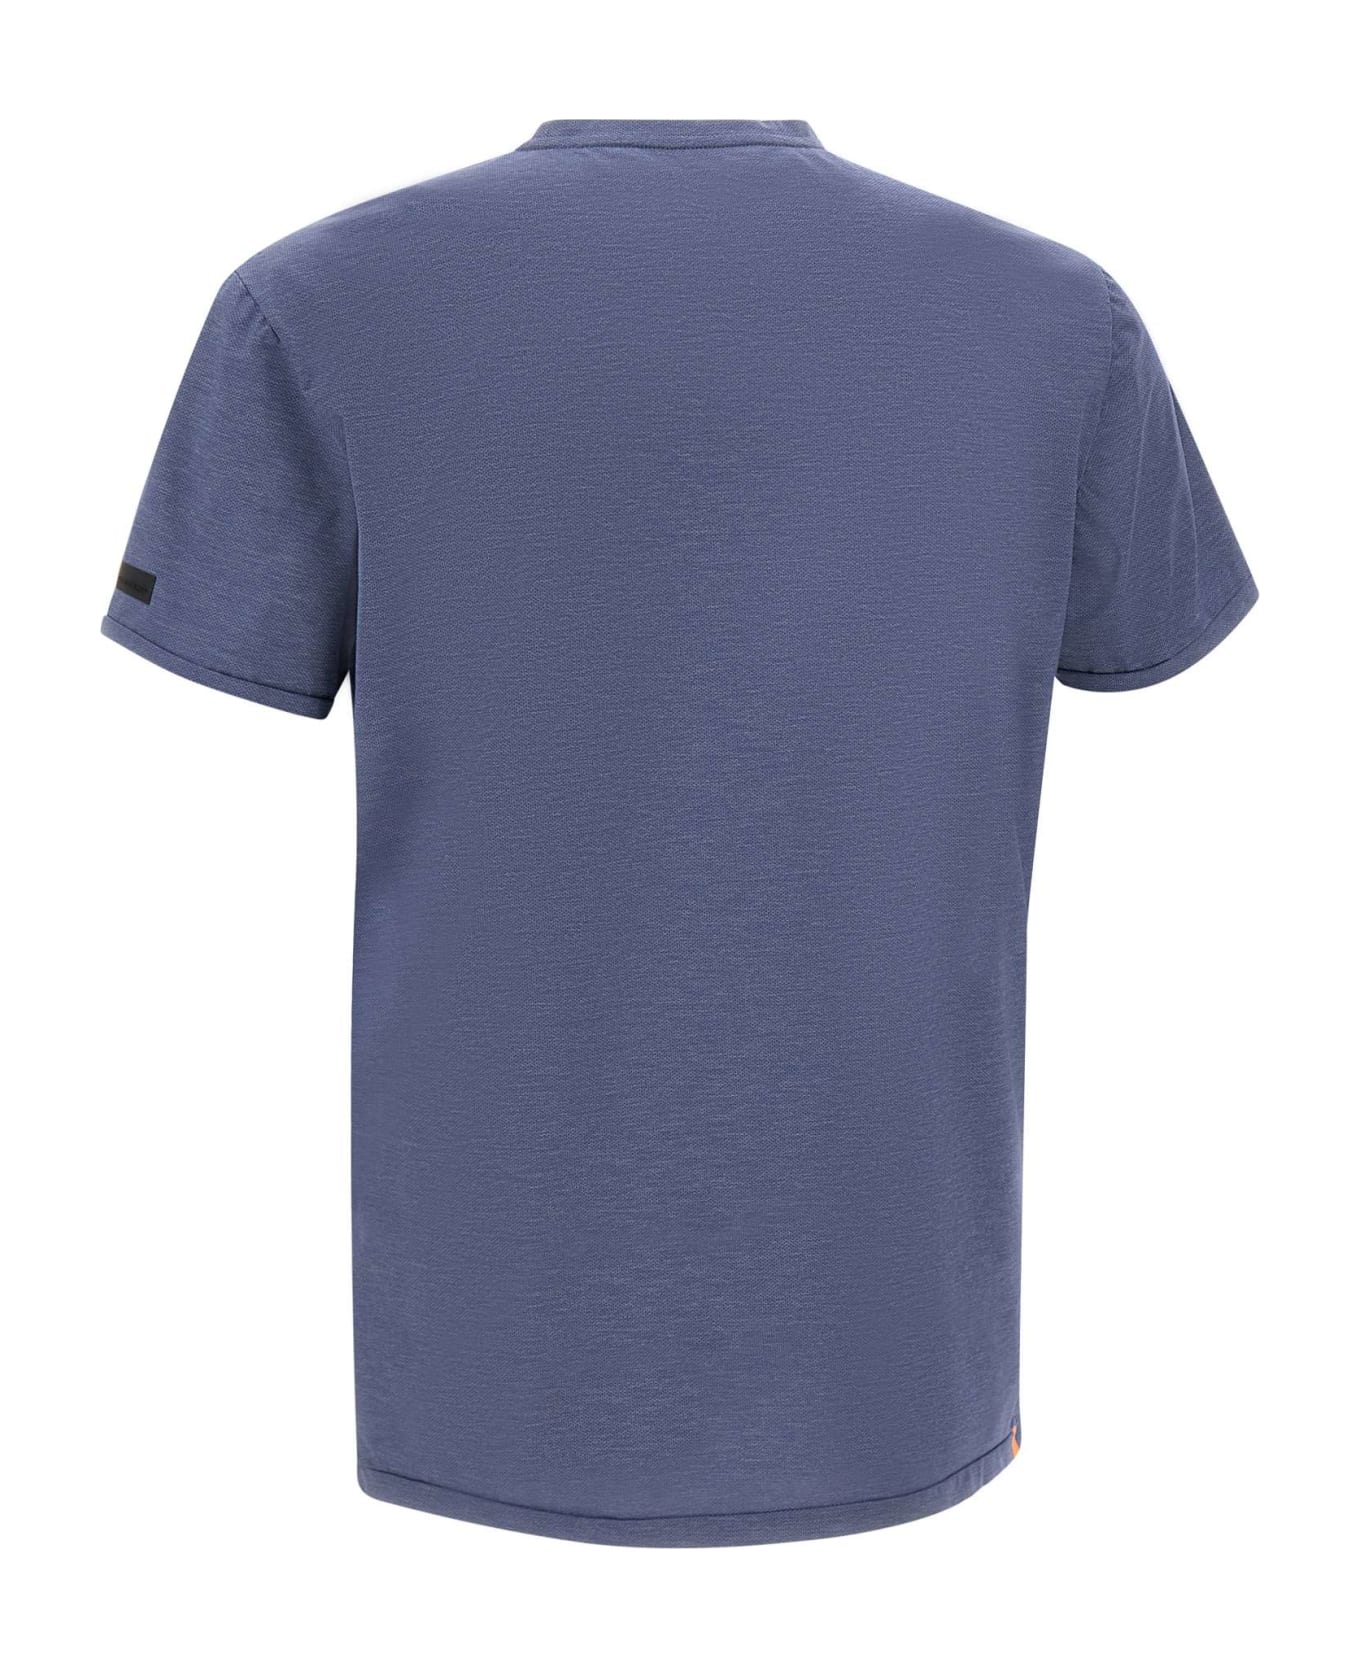 RRD - Roberto Ricci Design "summer Smart" T-shirt Fine Oxford Fabric - BLUE シャツ